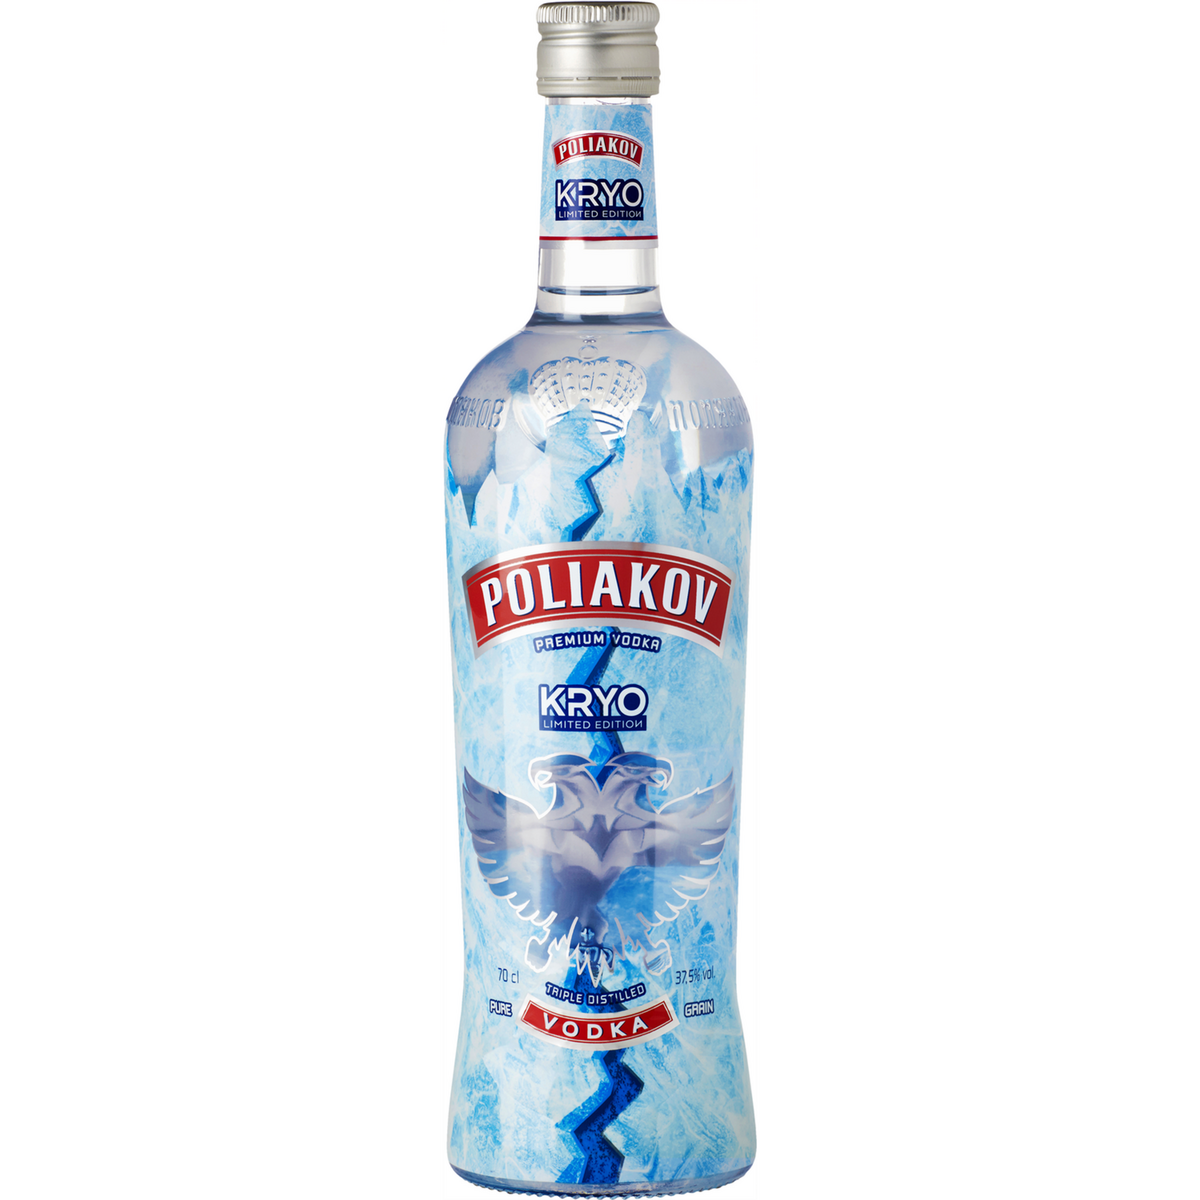 POLIAKOV Vodka Premium Kryo Pure grain Edition limitée 70cl